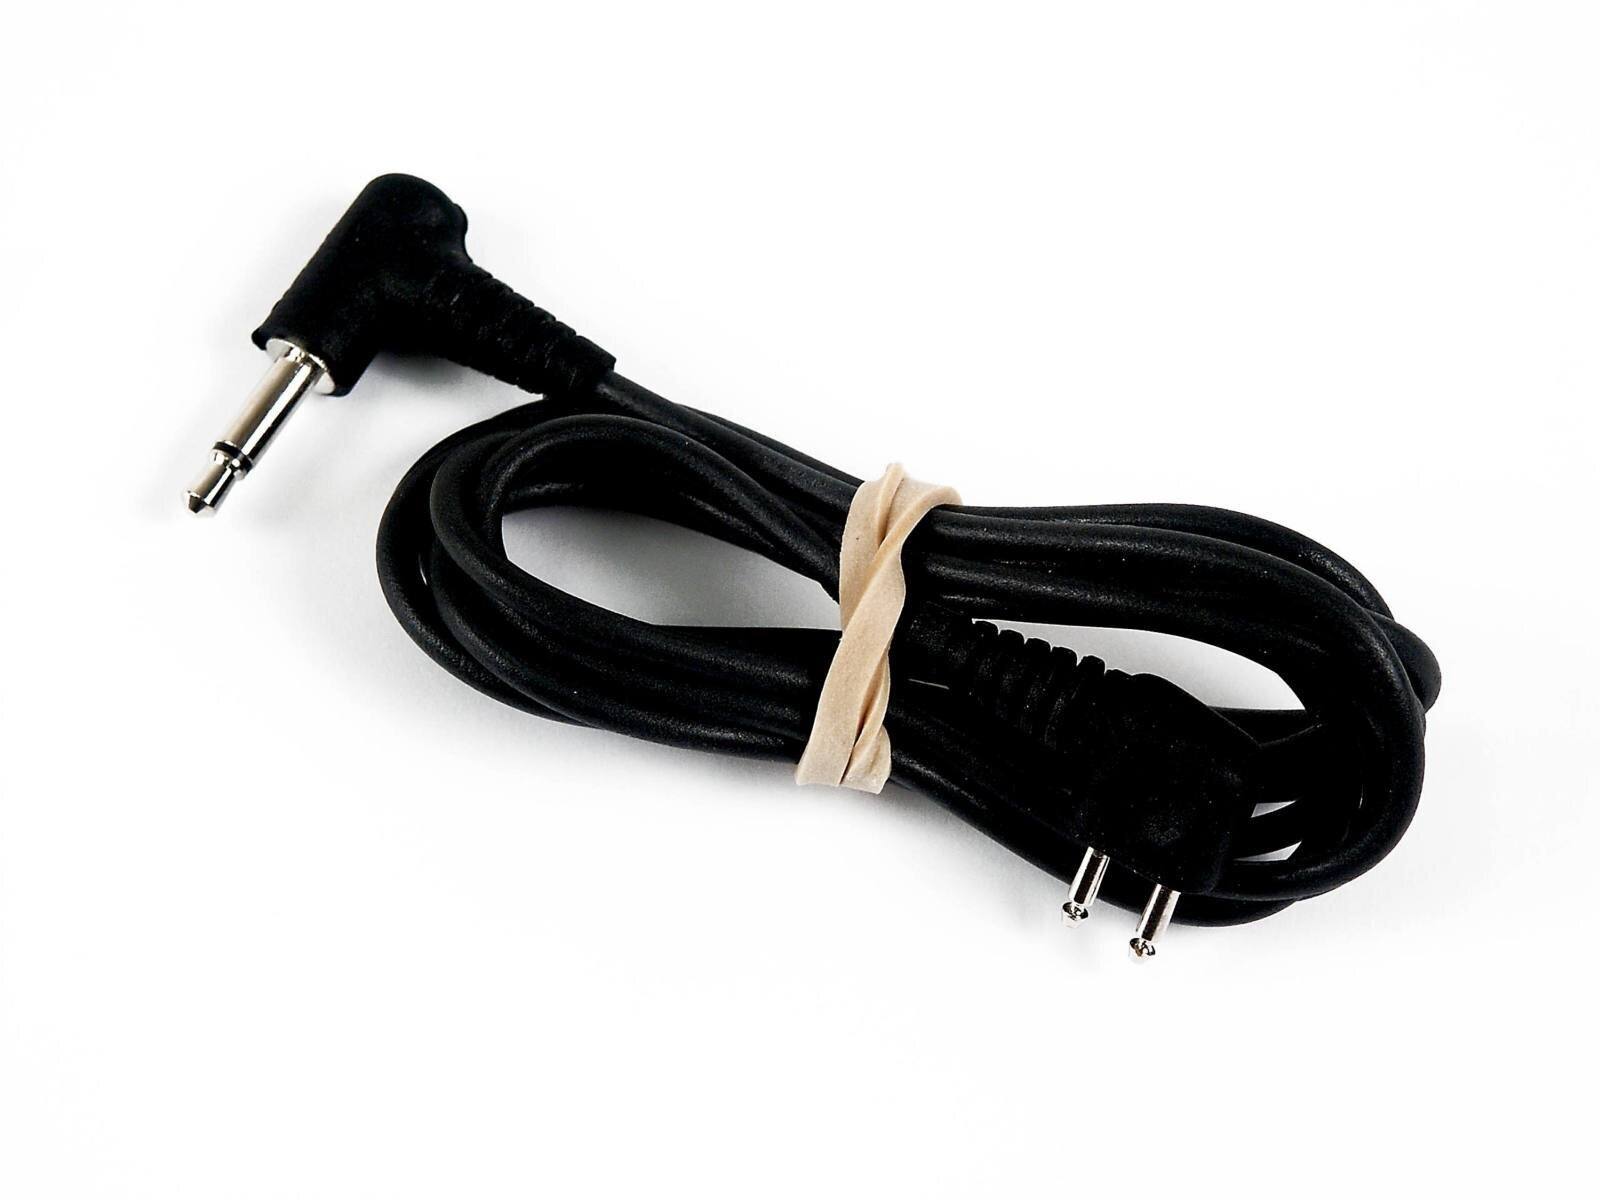 3M PELTOR Flex cable for Apple iPhone, HTC or Samsung, 3.5 mm, FL6U-66